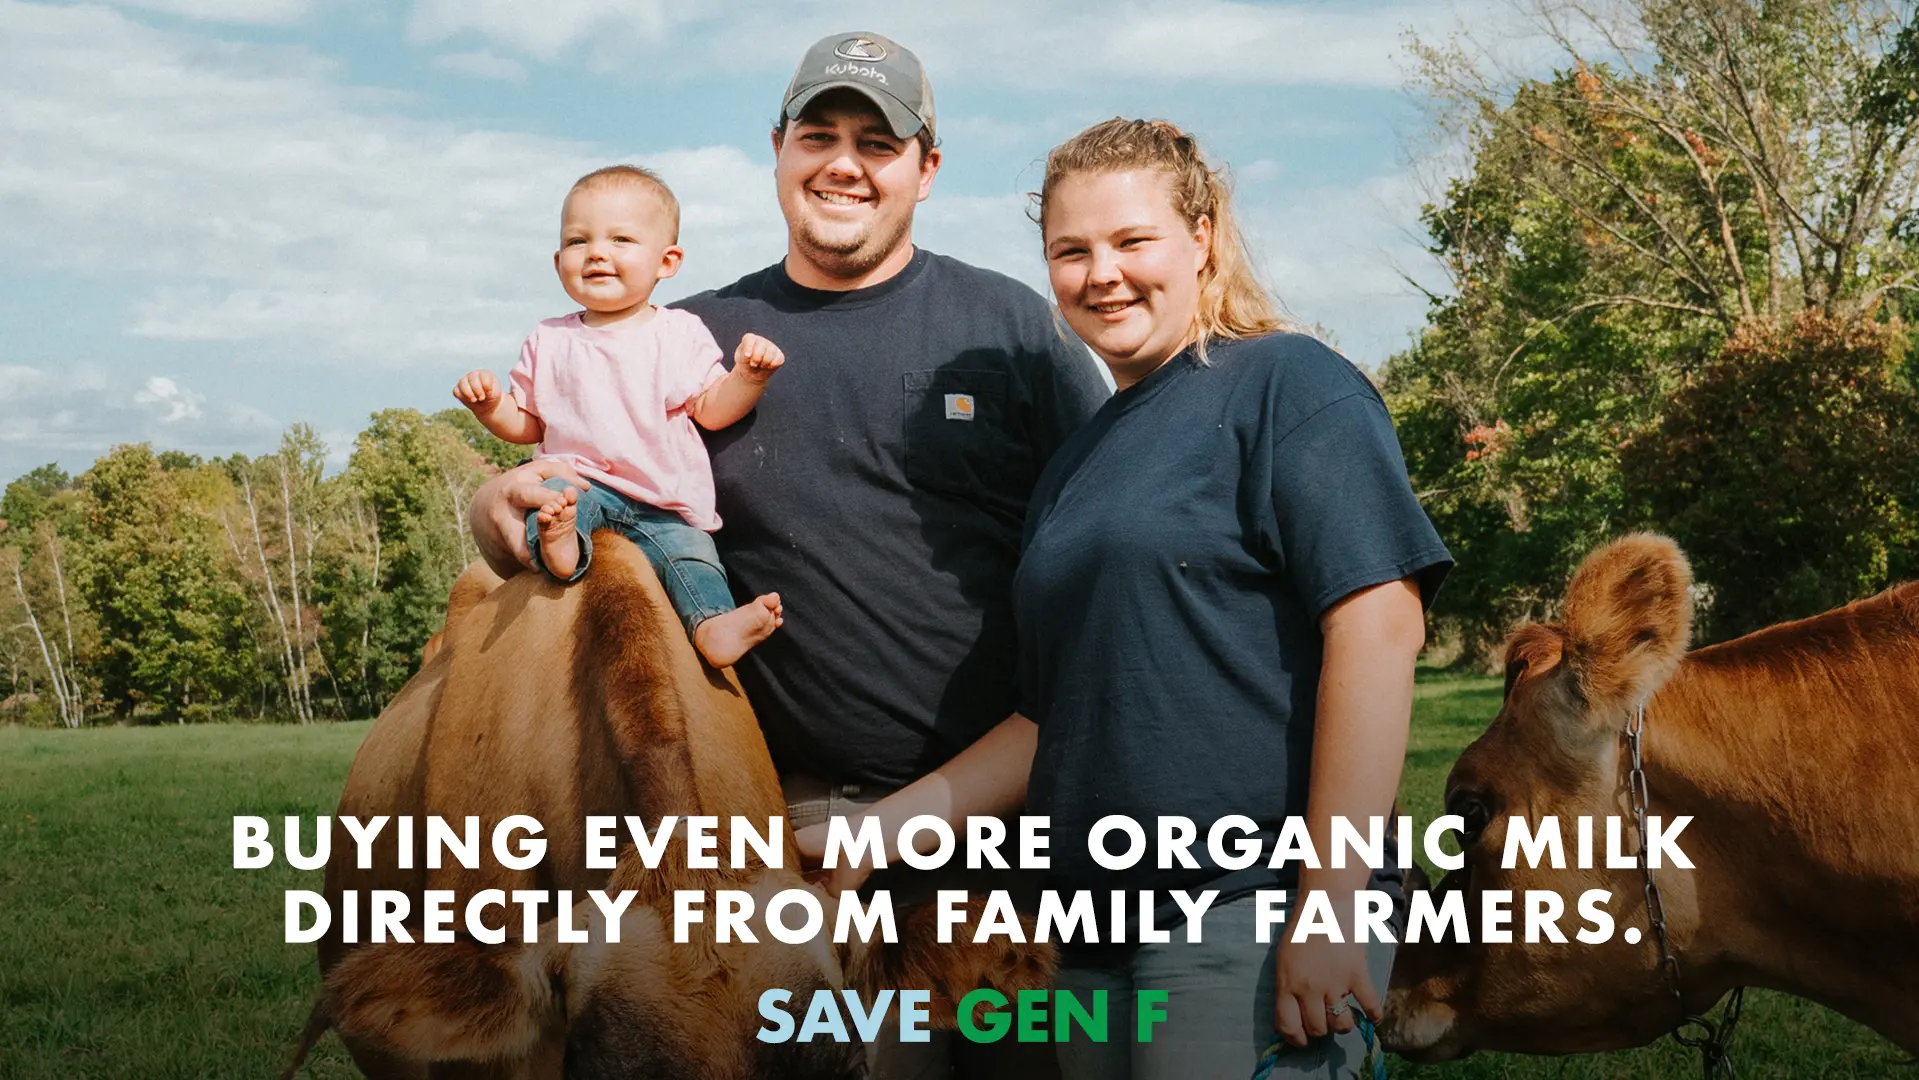 Stonyfield Organic Direct Supply Program | Save Gen F